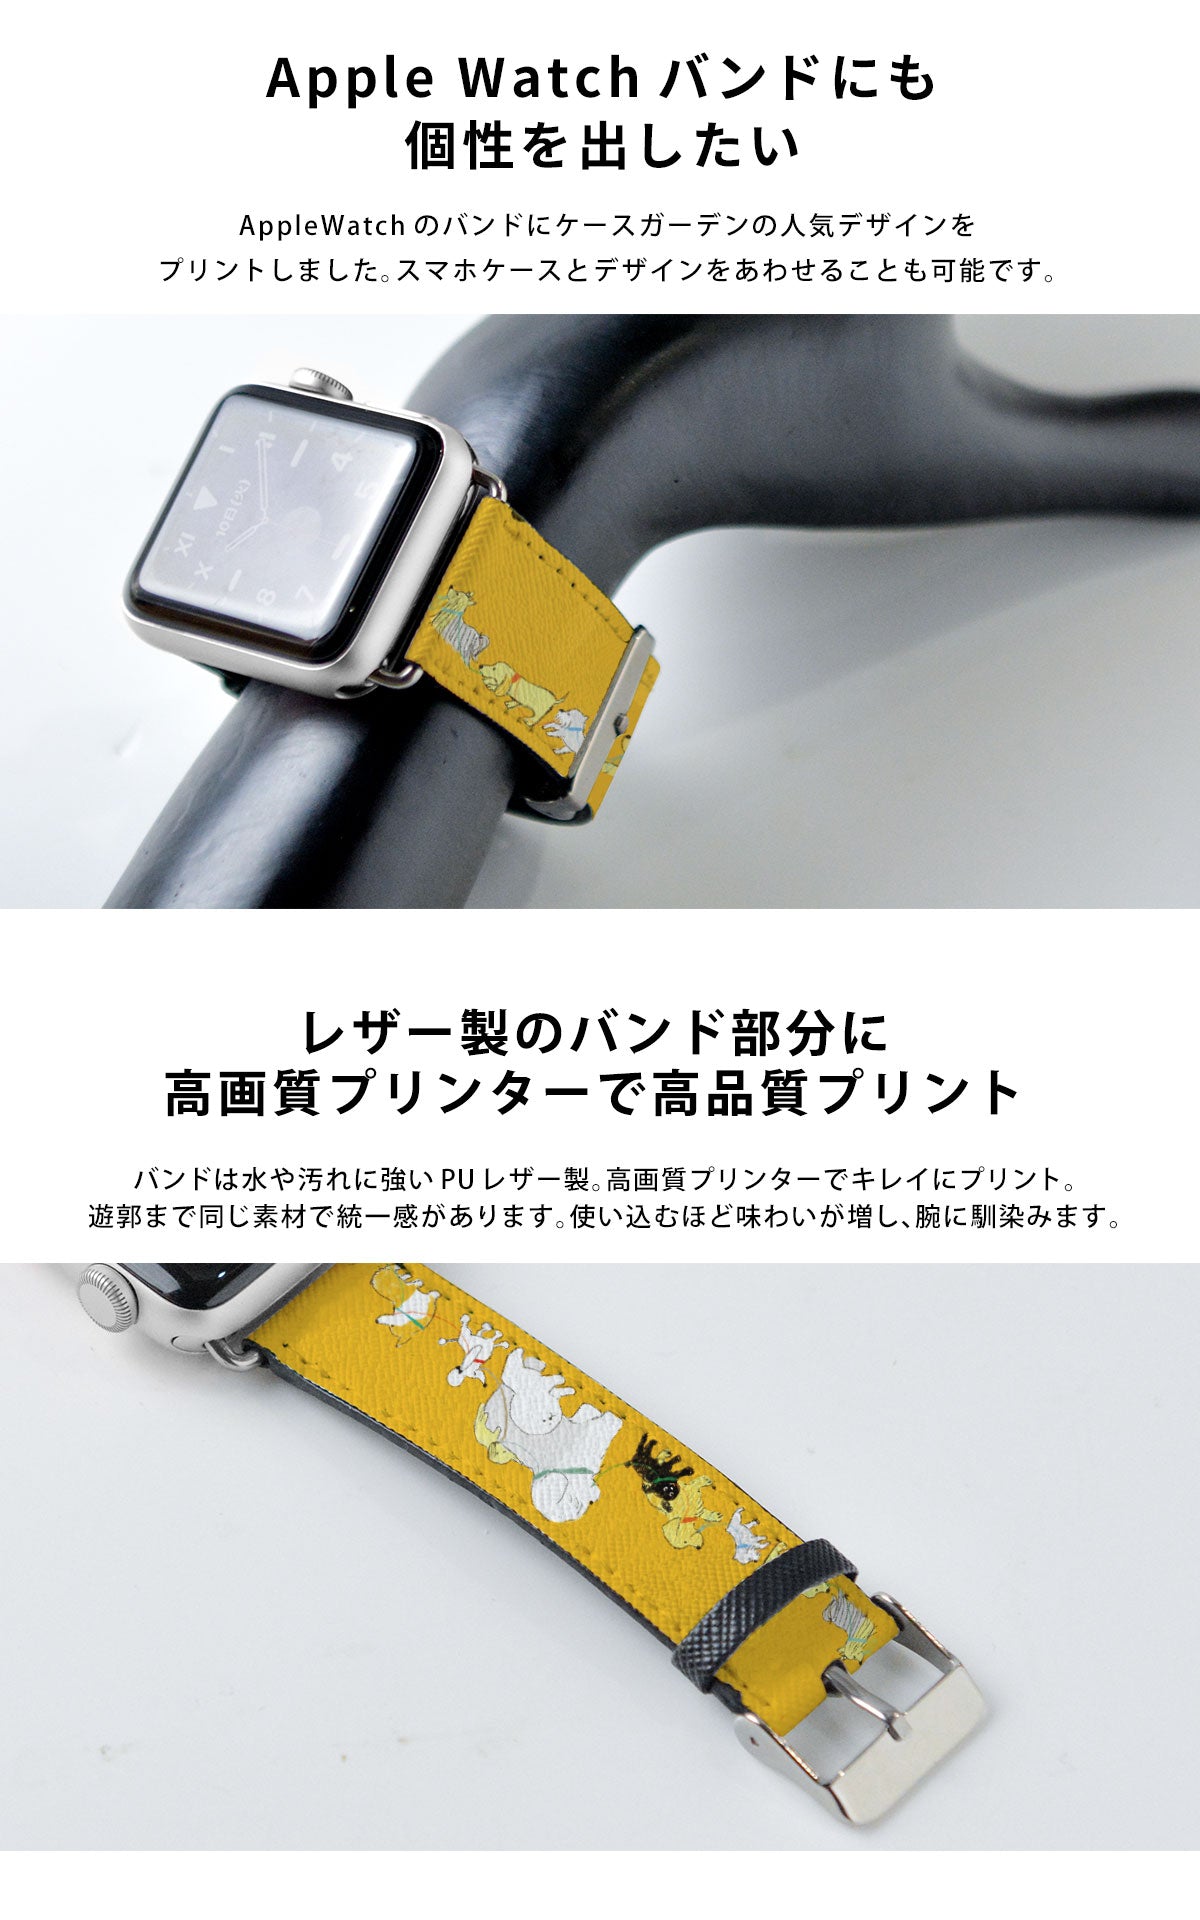 570-Apple Watch ラバーバンド ケース アップルウォッチ - 時計